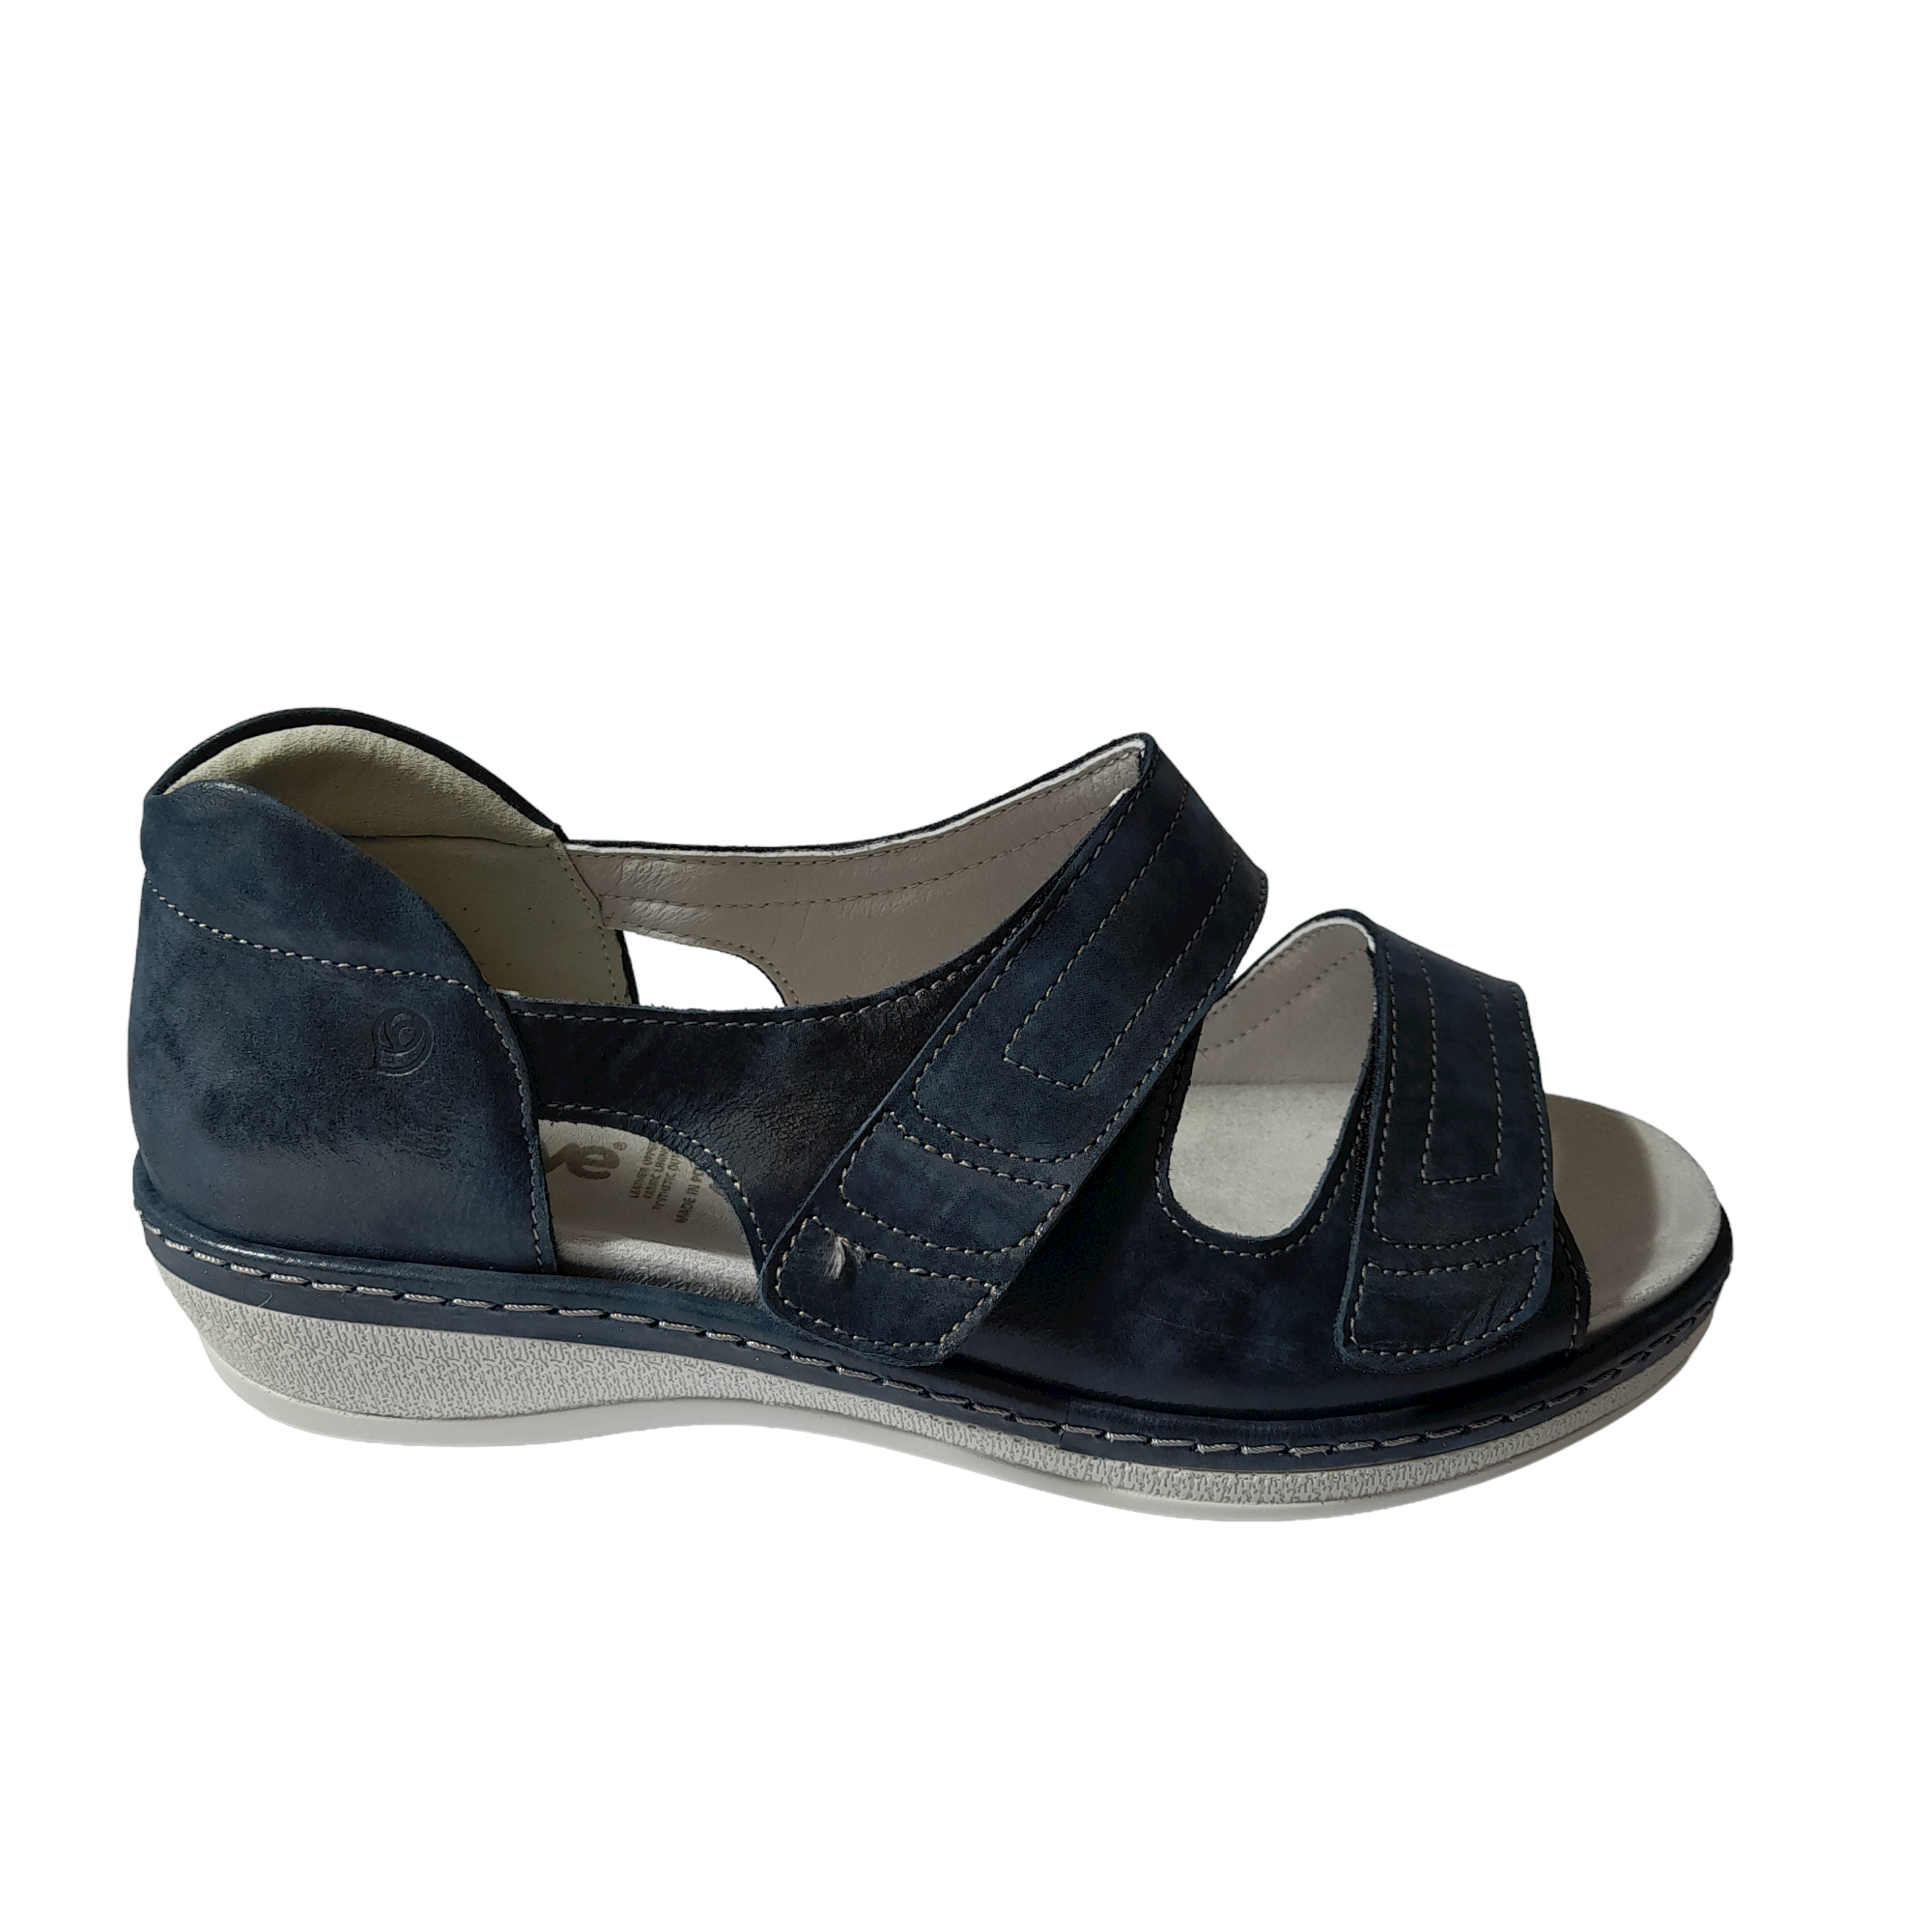 S-Attica - shoe&amp;me - Suave - Sandal - Sandal, Womens